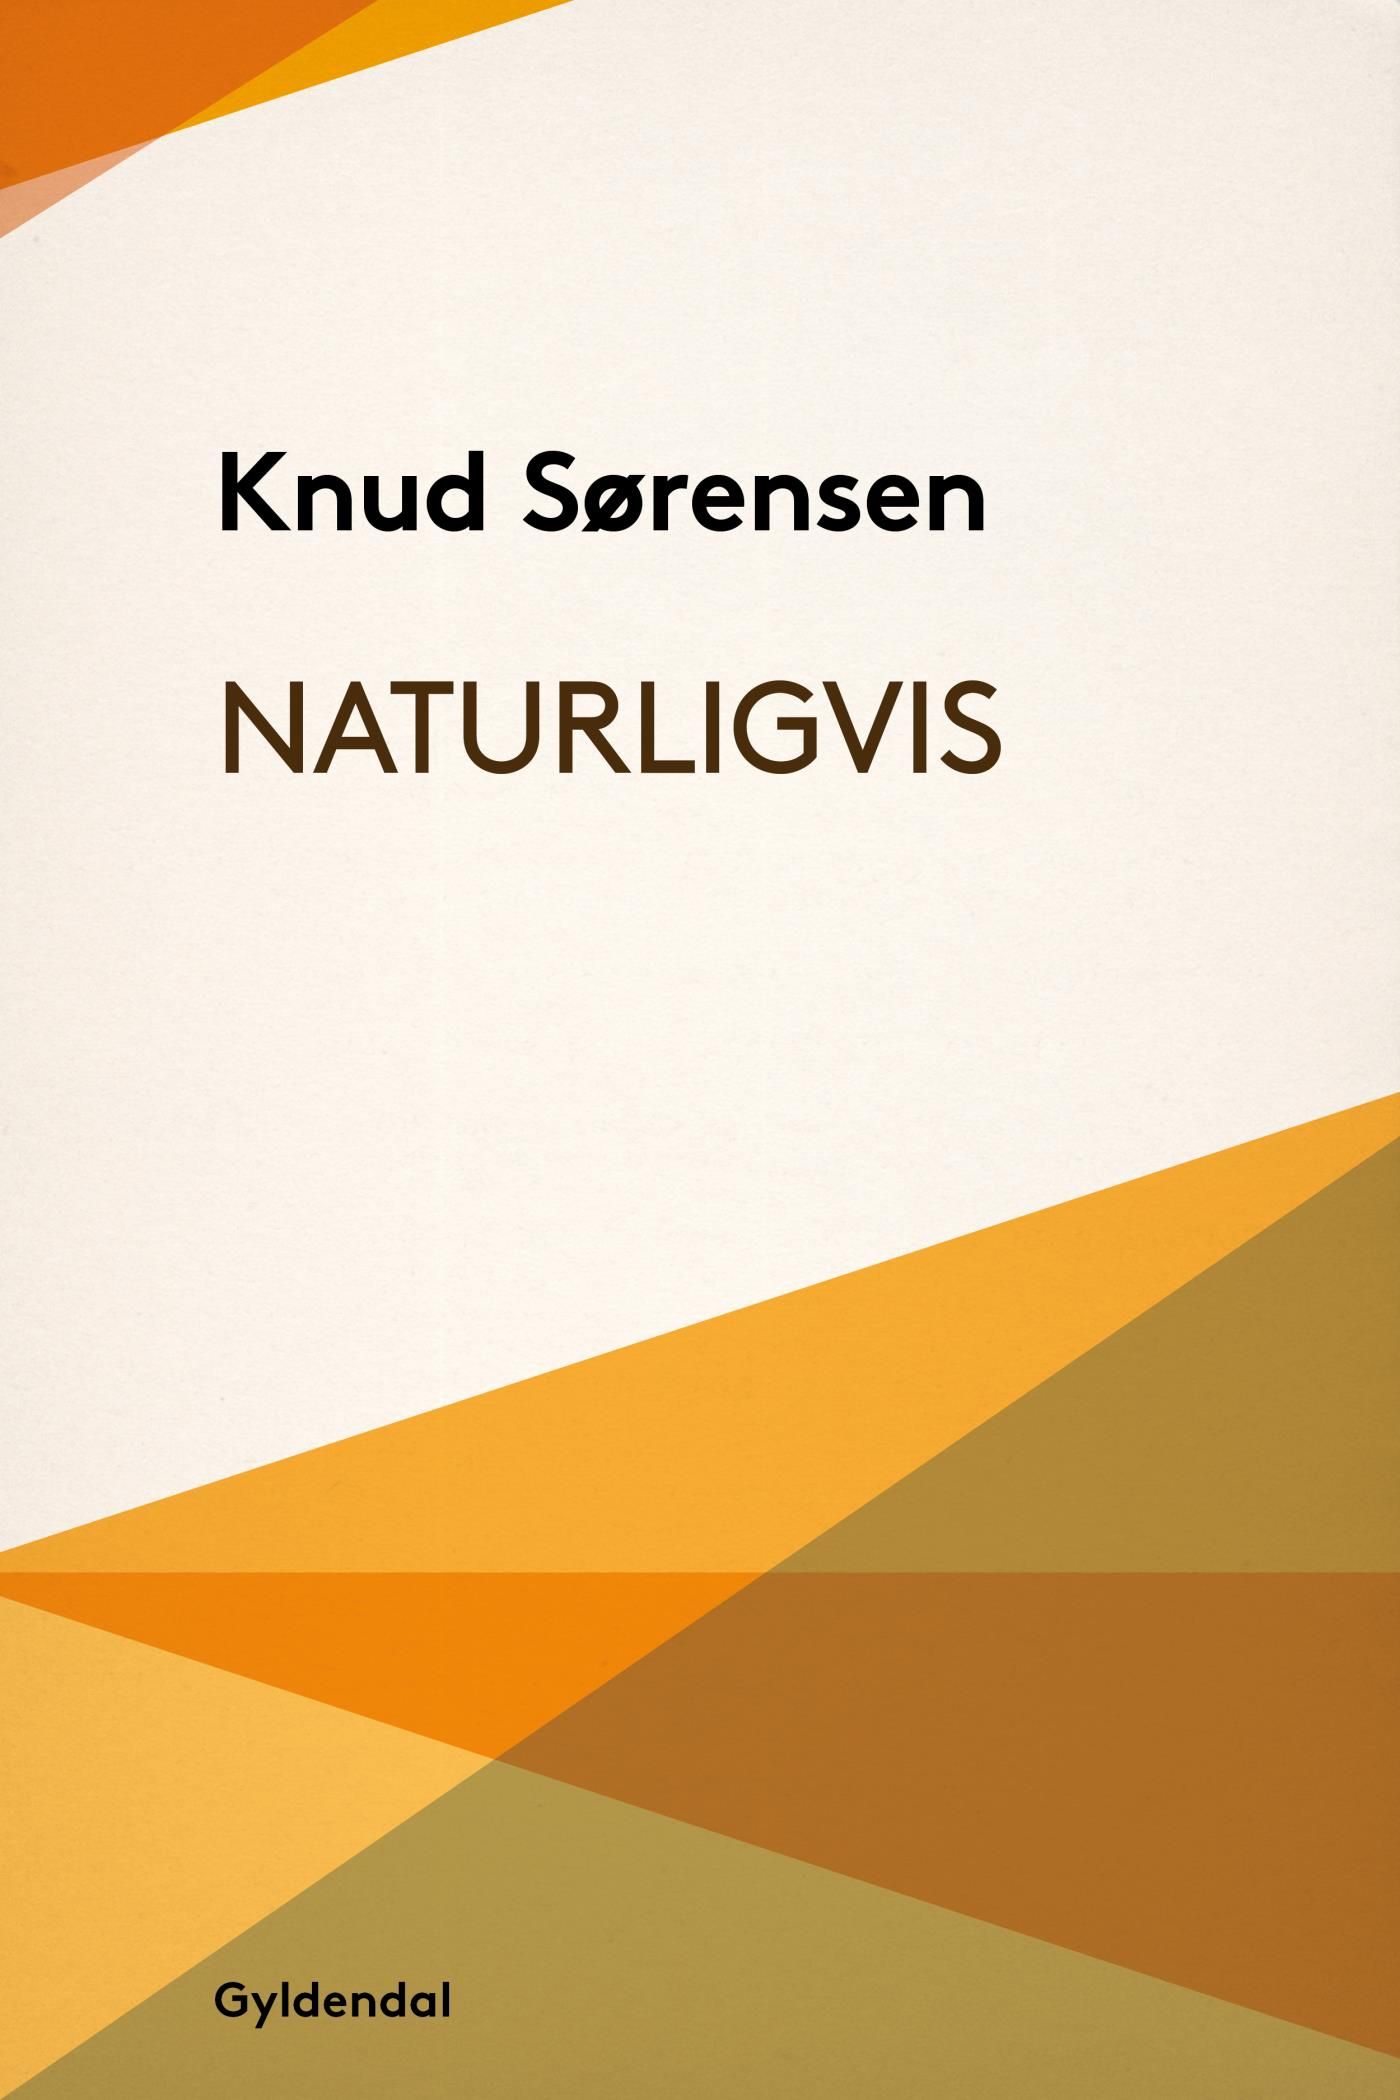 Naturligvis, eBook by Knud Sørensen